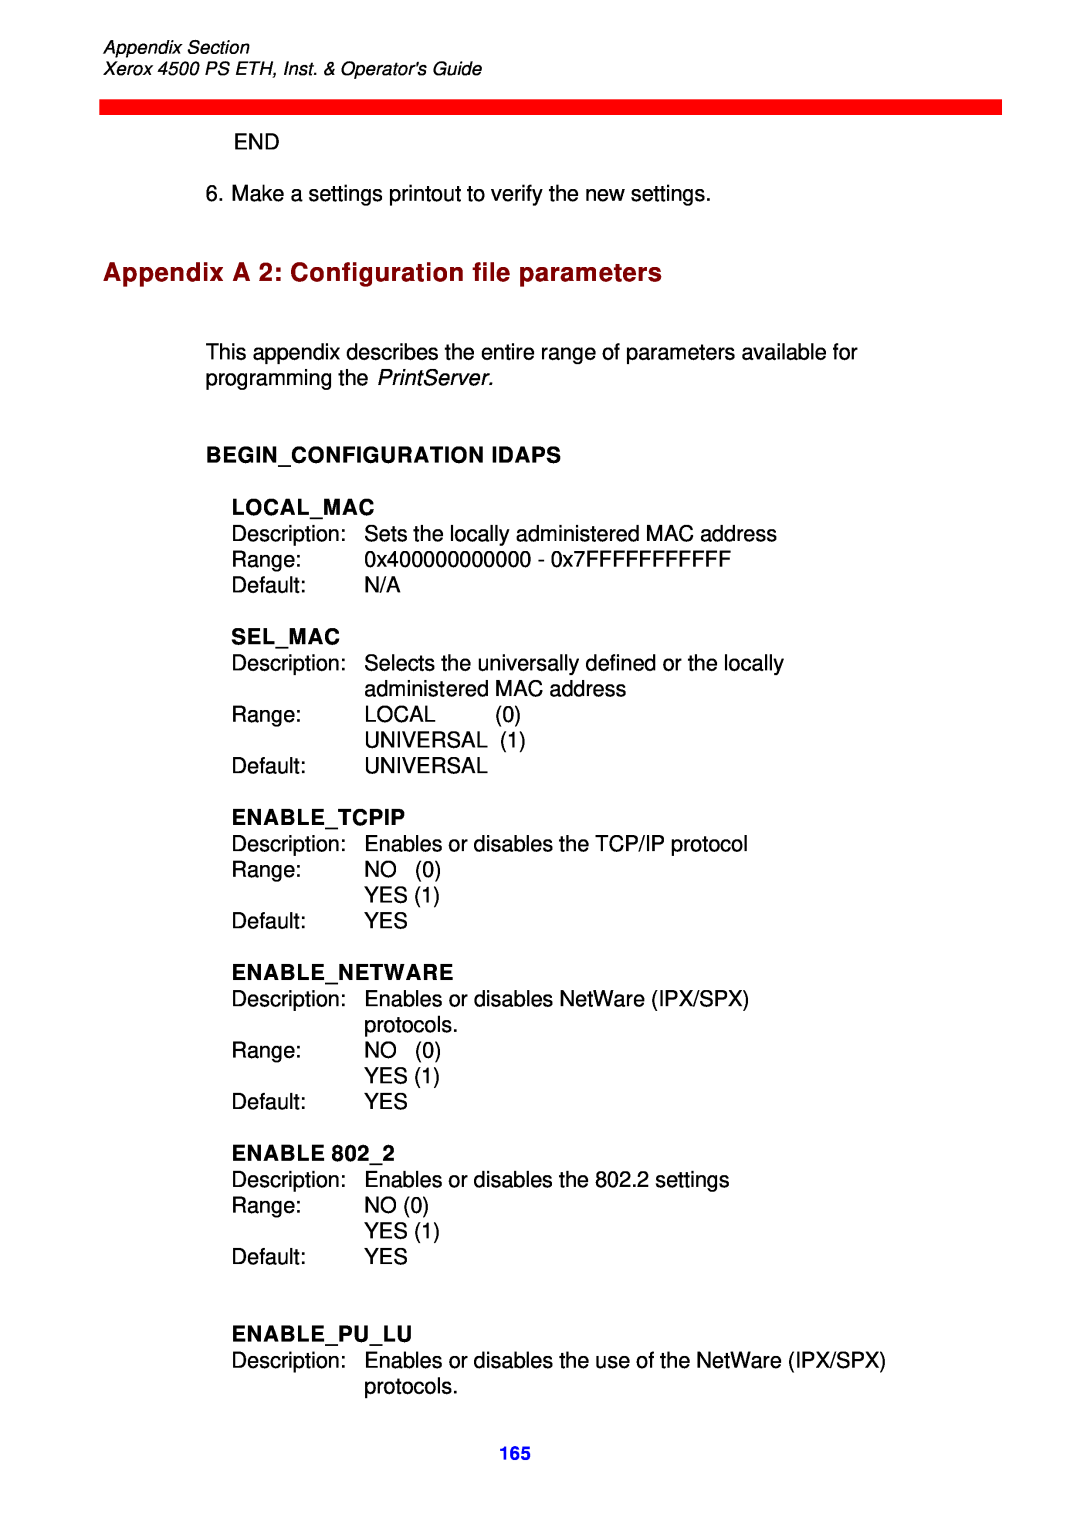 Xerox 4500 ps eth Appendix A 2 Configuration file parameters, Beginconfiguration Idaps Localmac, Selmac, Enabletcpip 